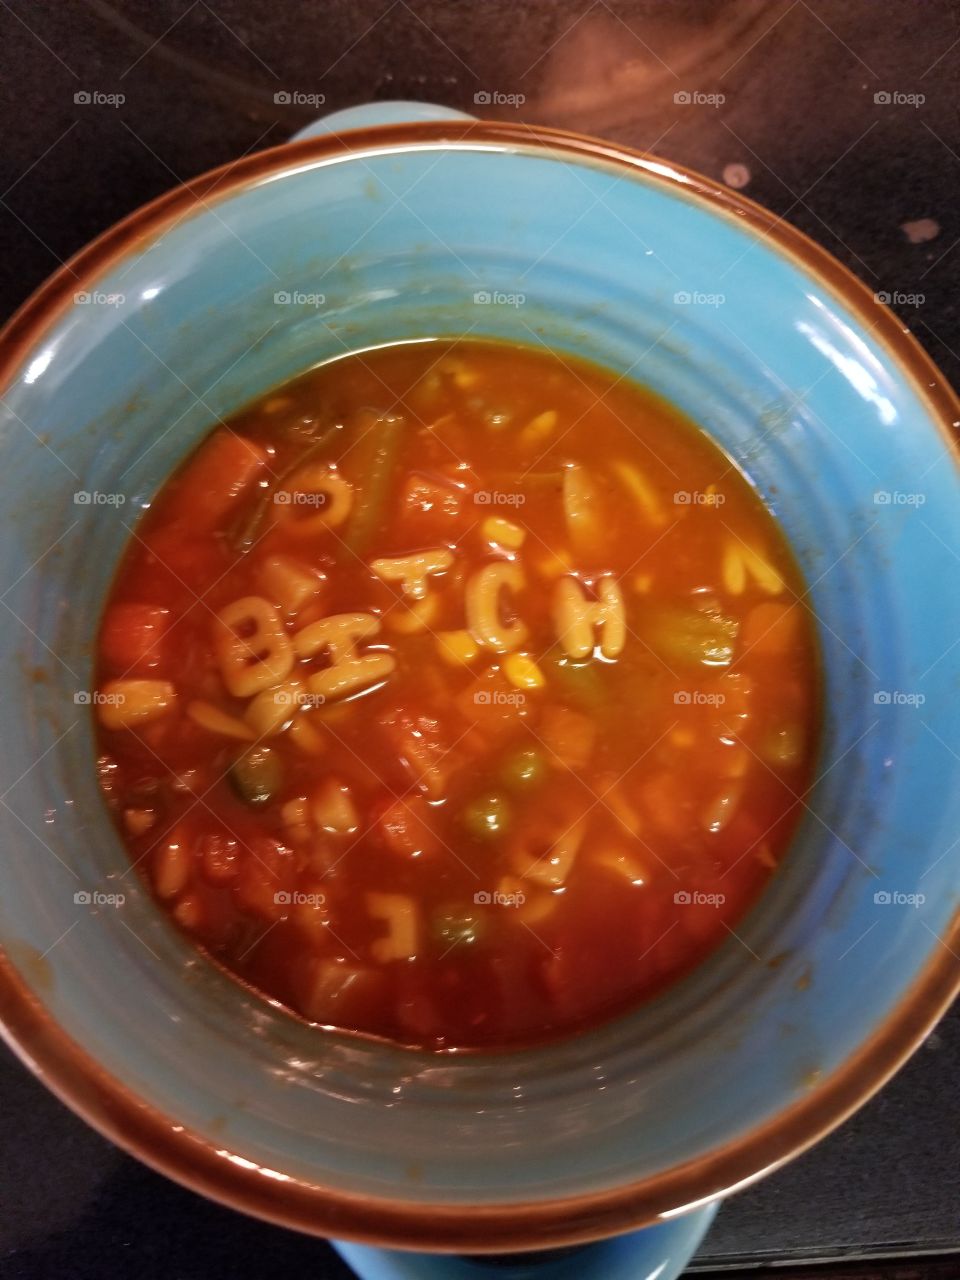 'BI**H' alphabet soup